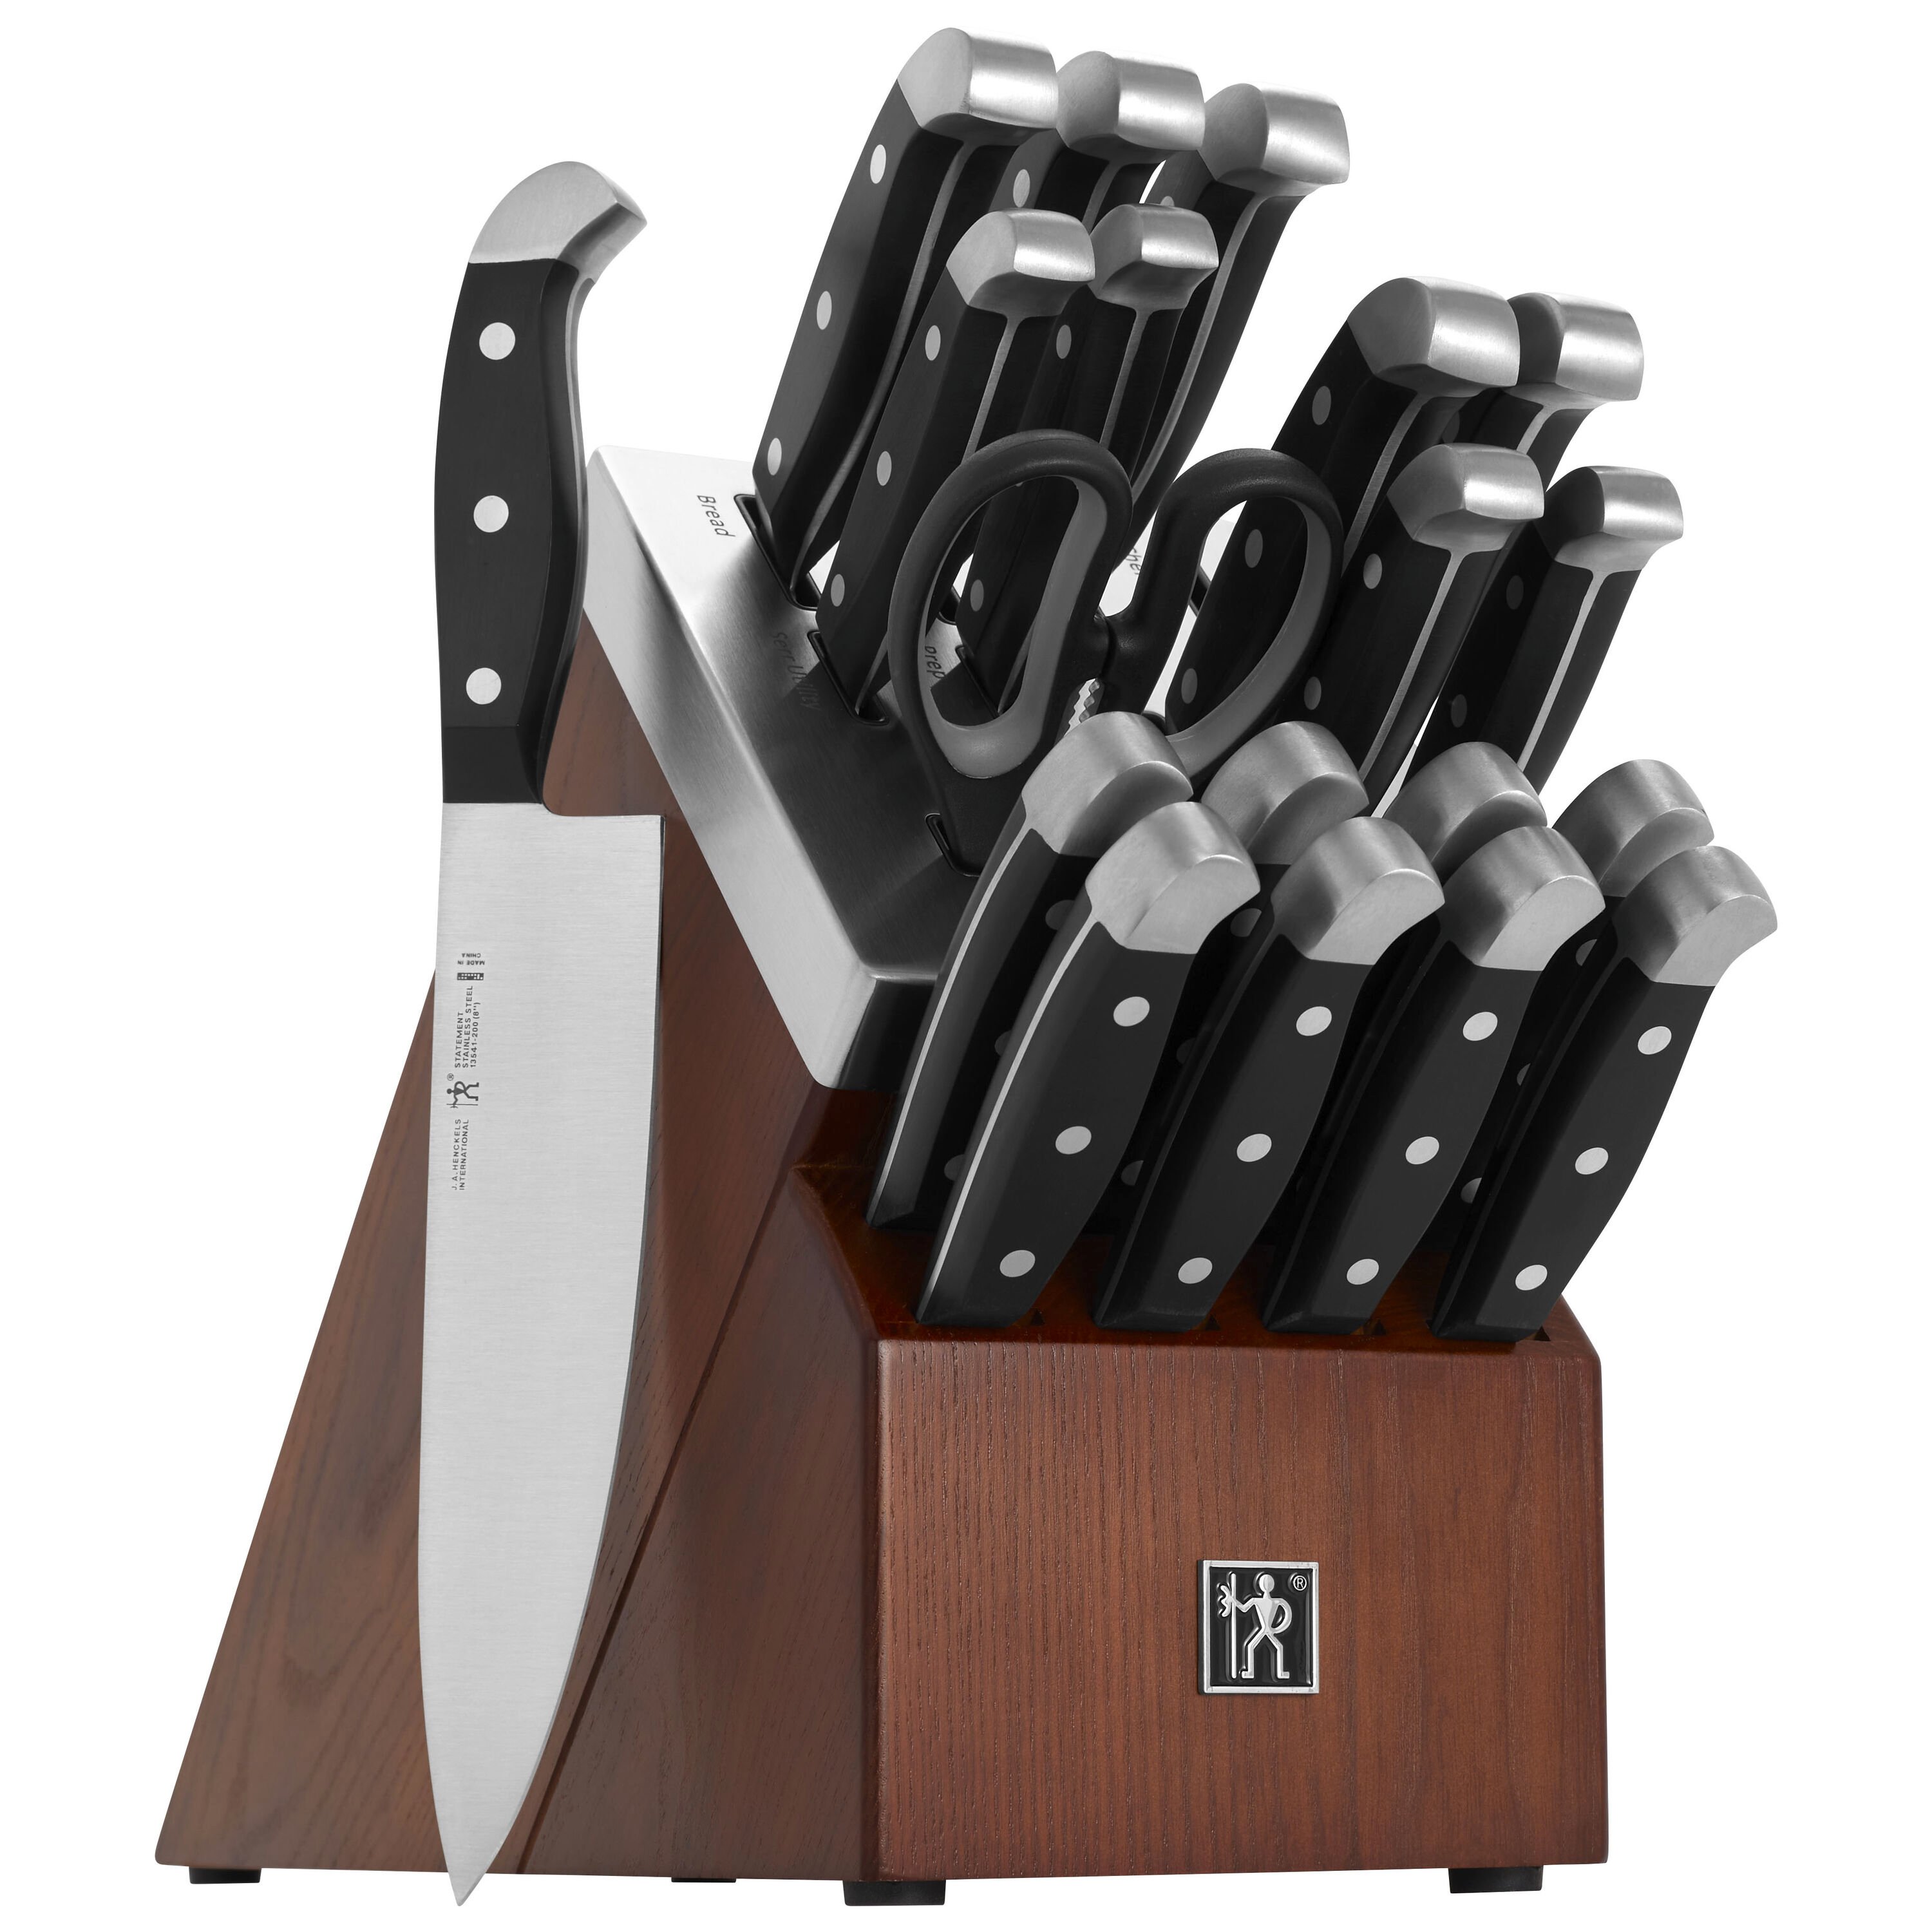 Zwilling J.A. Henckels Professional S 20-Piece Knife Block Set